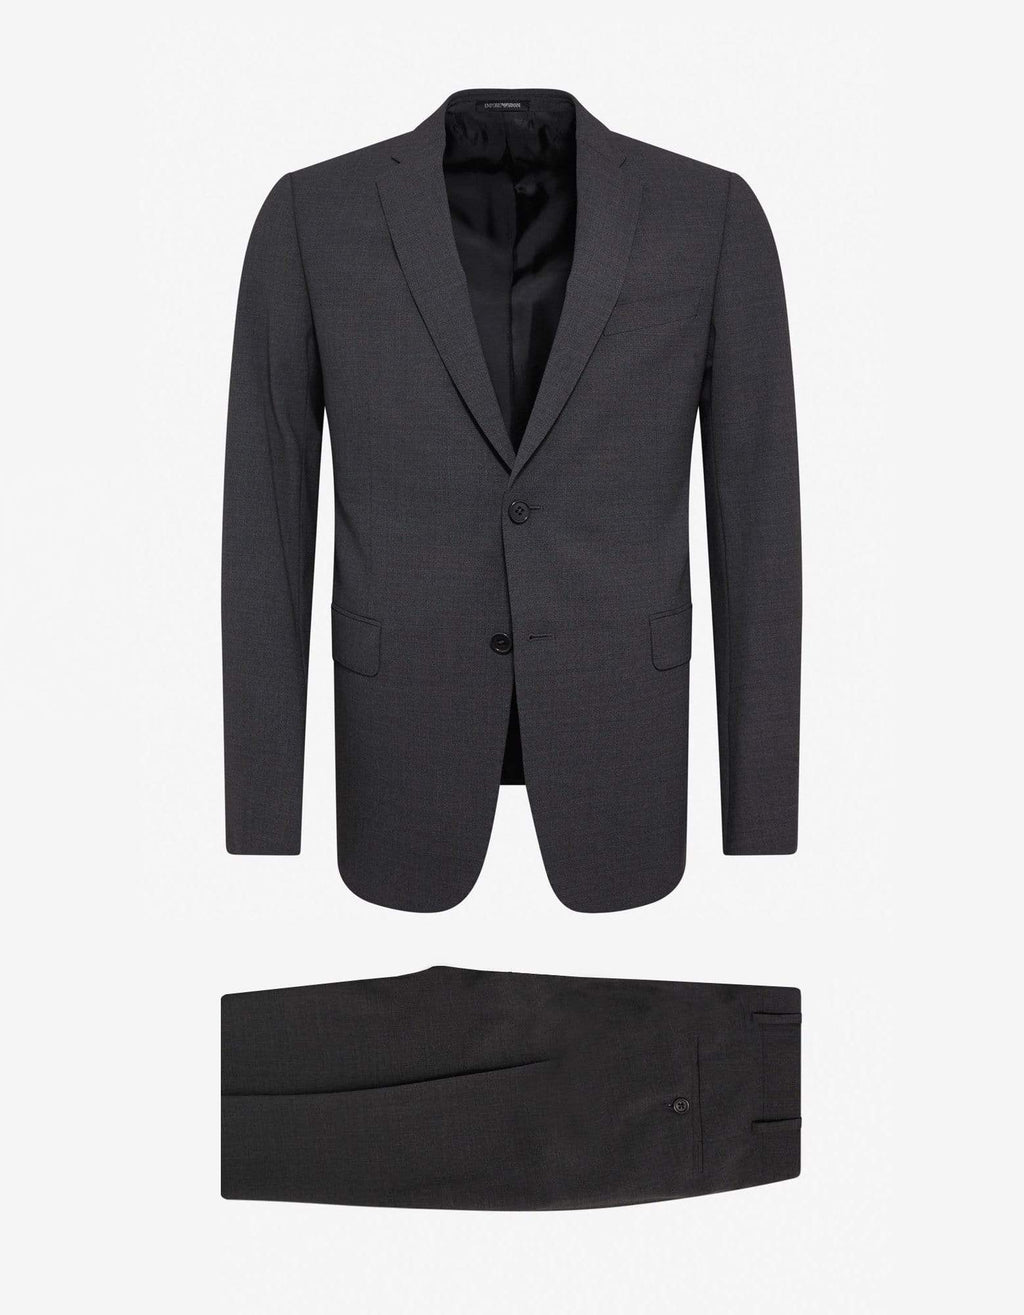 Emporio Armani Emporio Armani Grey Wool-Blend Two-Button Suit